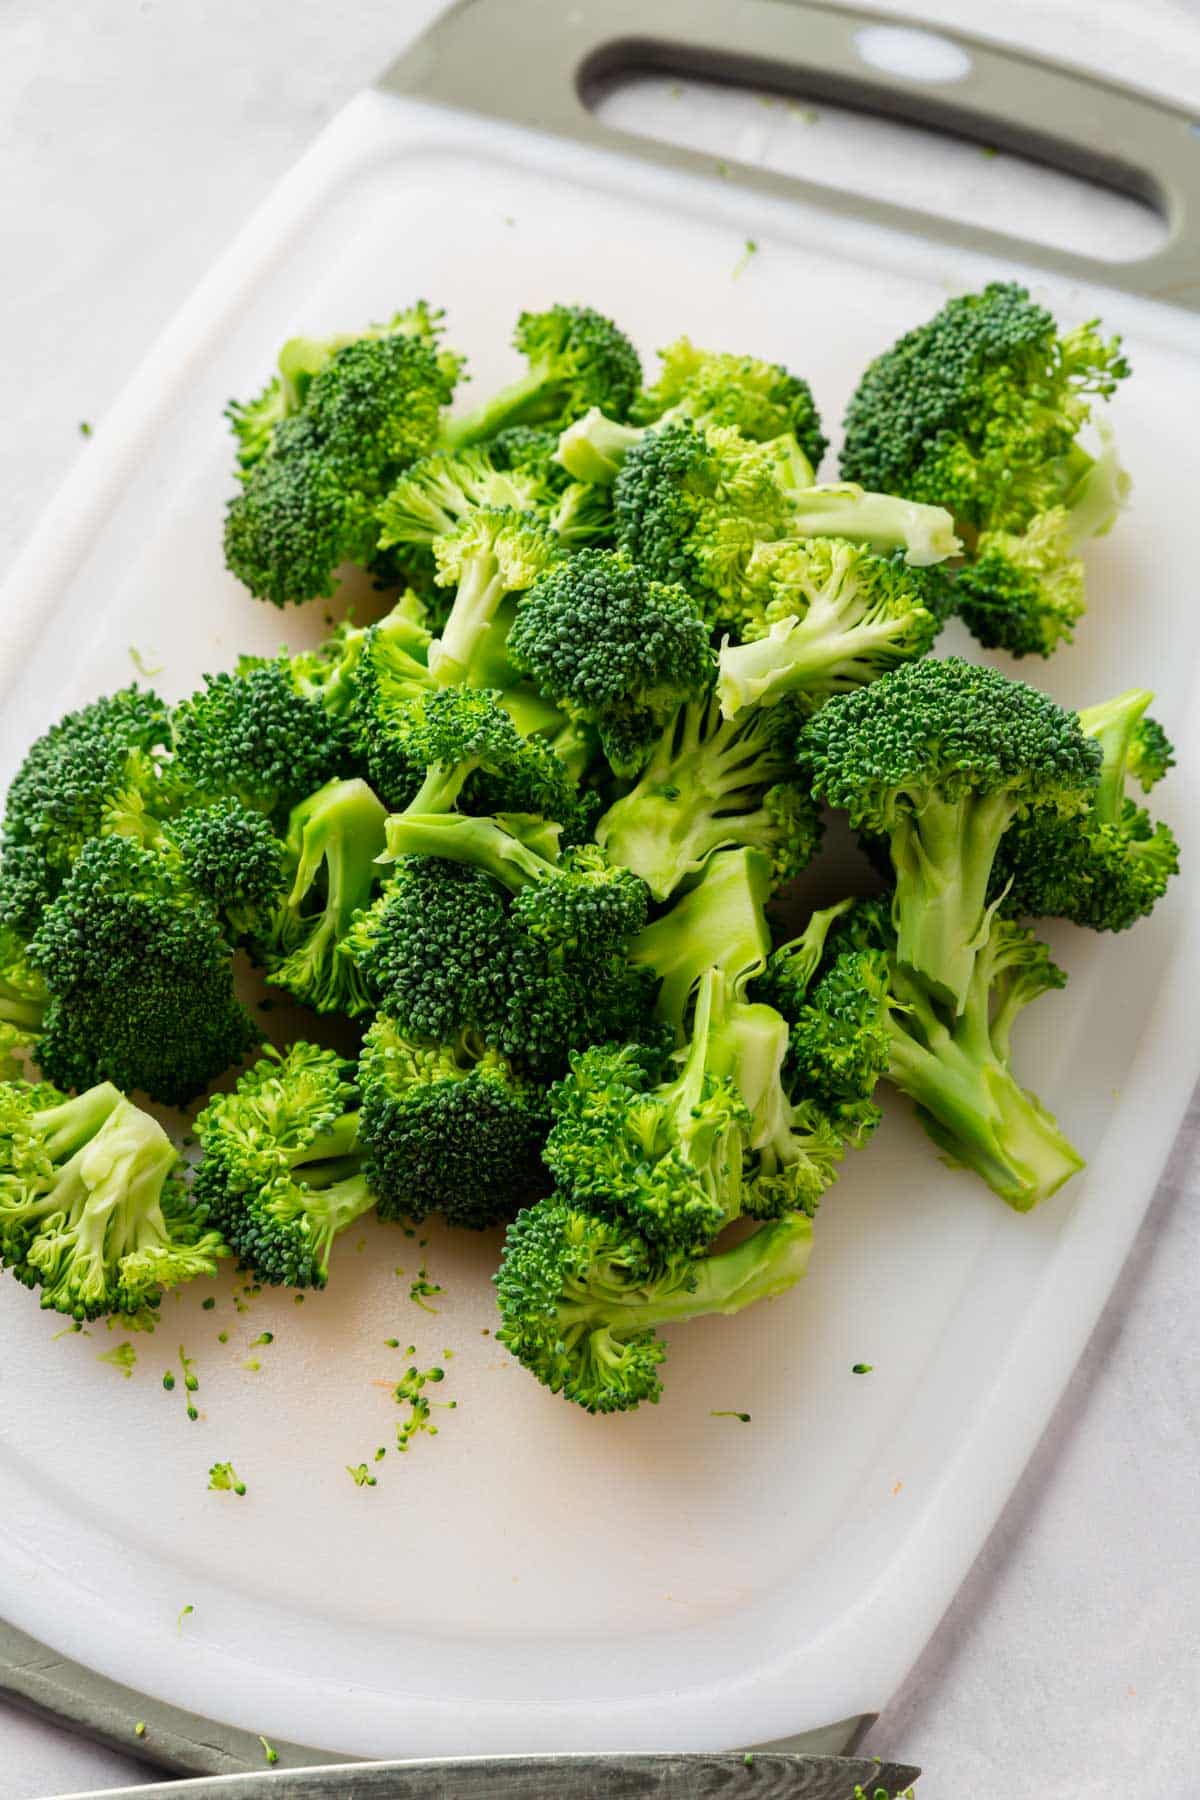 Broccoli cut into small florets on a white cutting board.